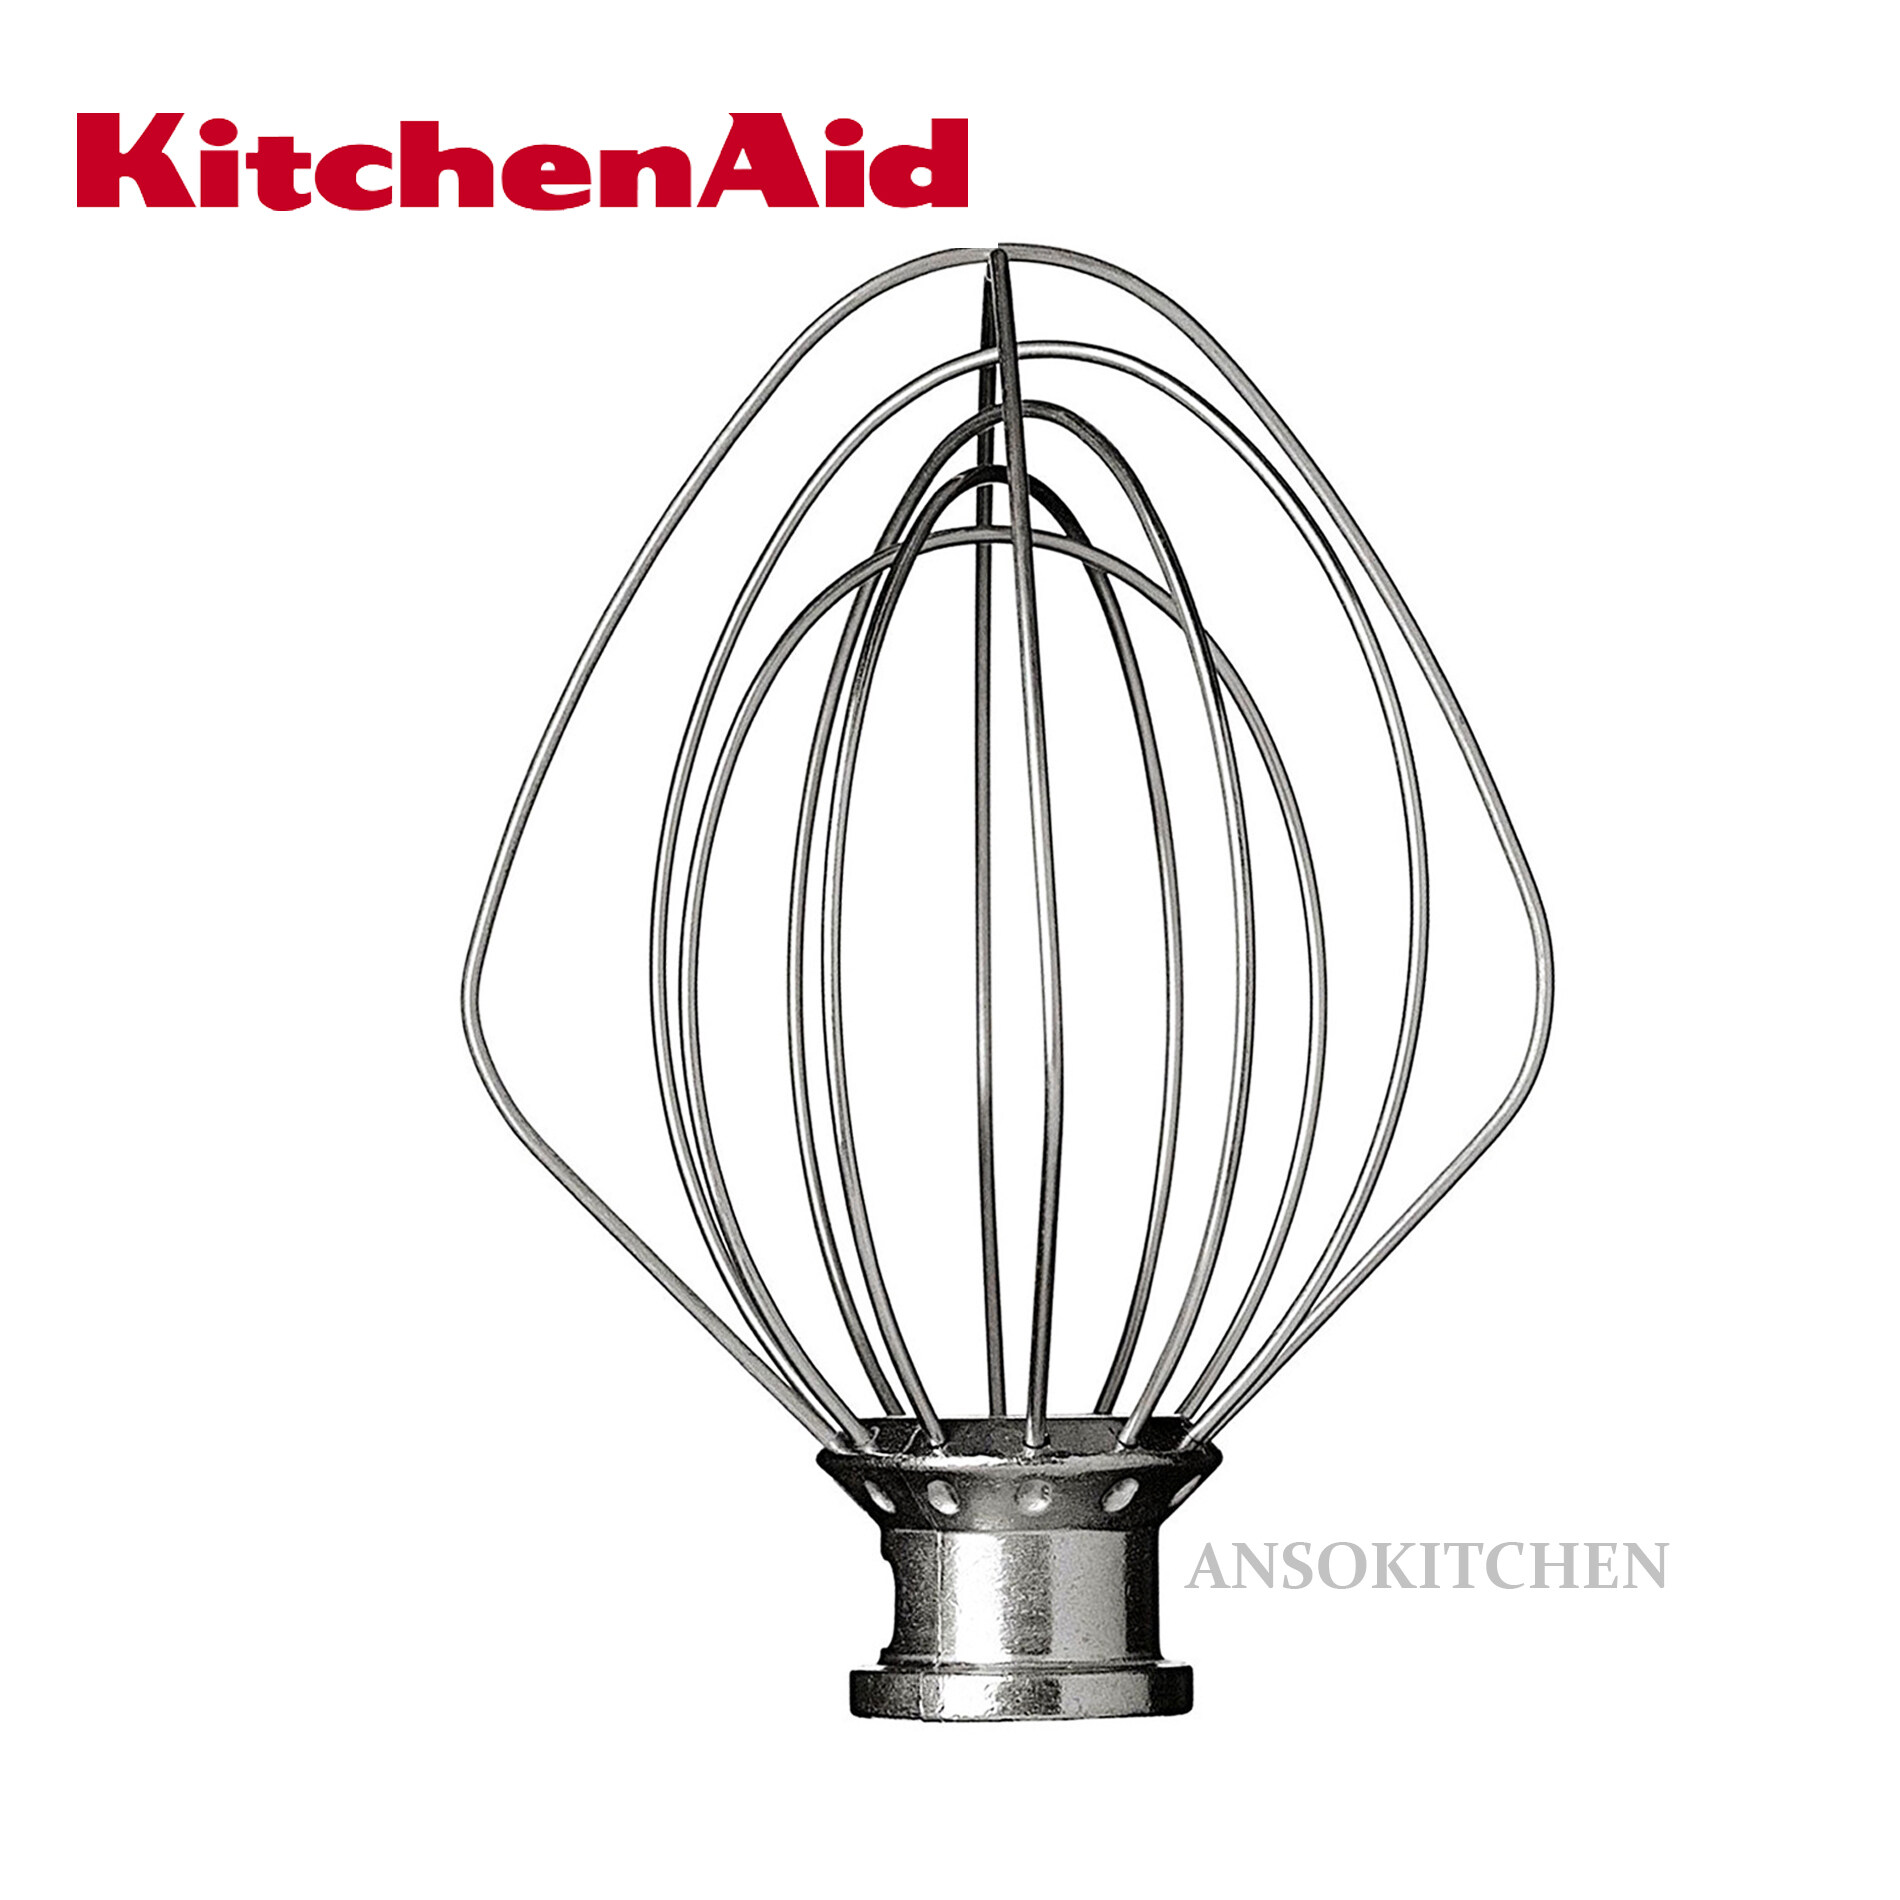 KitchenAid หัวตีตะกร้อ (Wire Whip) สำหรับเครื่องตีแป้ง / ผสมอาหาร รุ่น 5K5SS Heavy Duty Bowl-Lift Stand Mixer (5 qt./4.8L bowl )